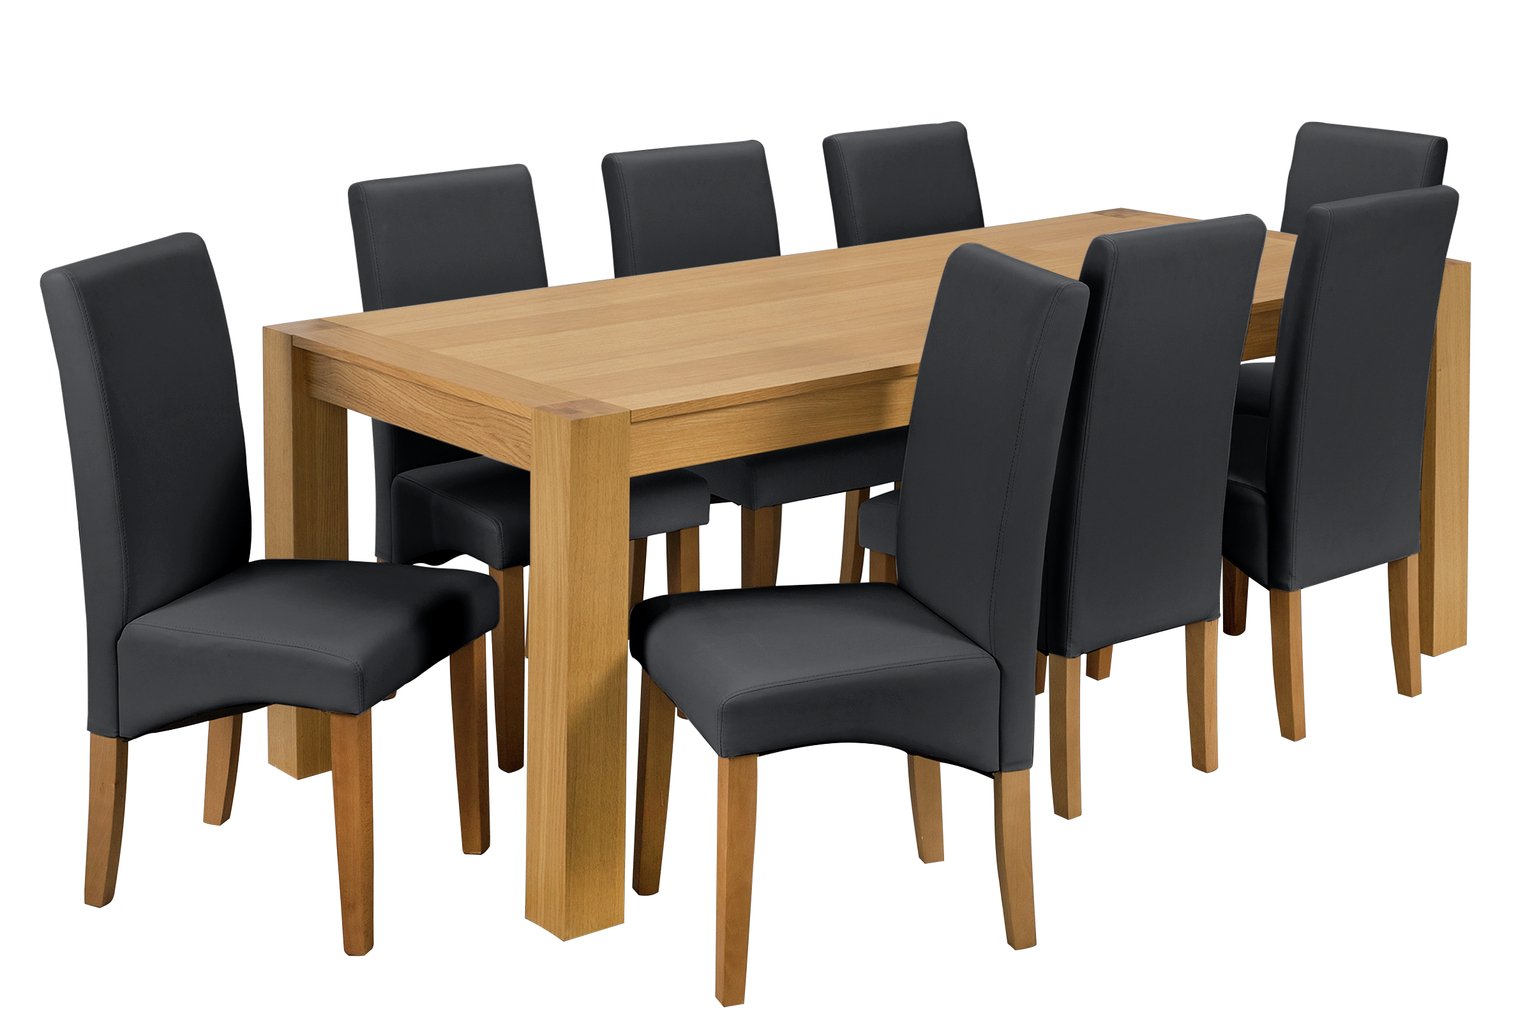 Argos Home Alston Oak Veneer Table and 8 Chairs - Black